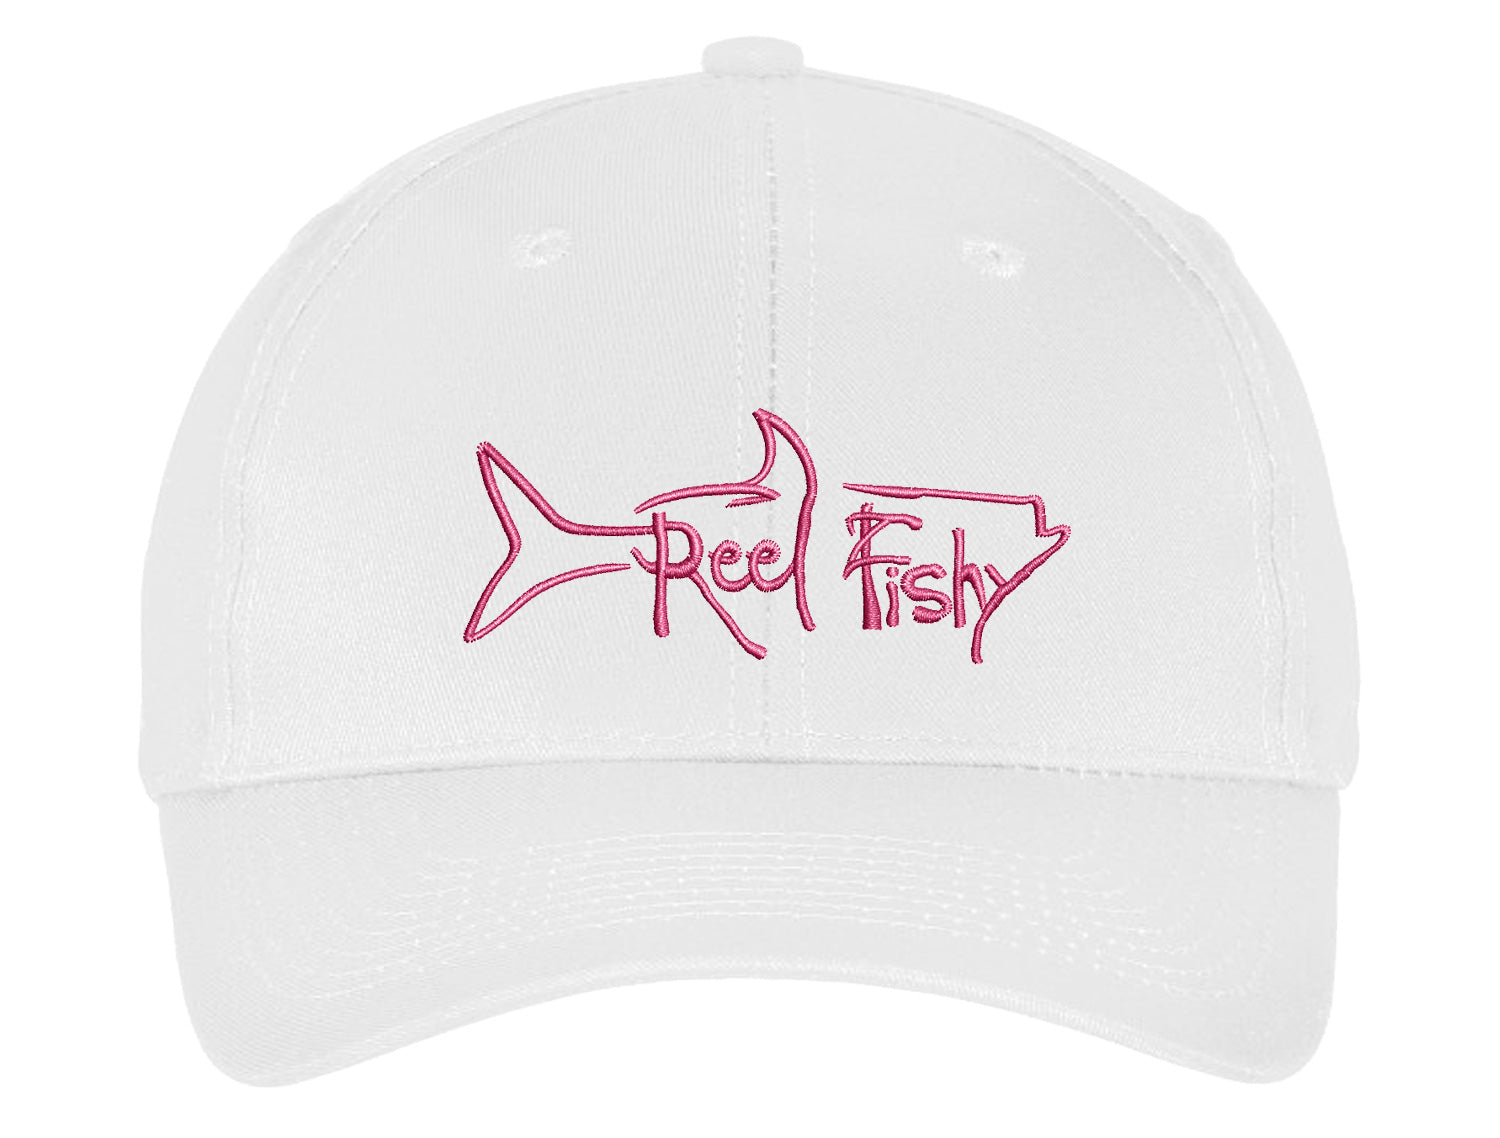 Tarpon Fishing Hats, Baseball Cap, Dad Hat, Camo Hat - *8 Colors! White W/Pink Logo